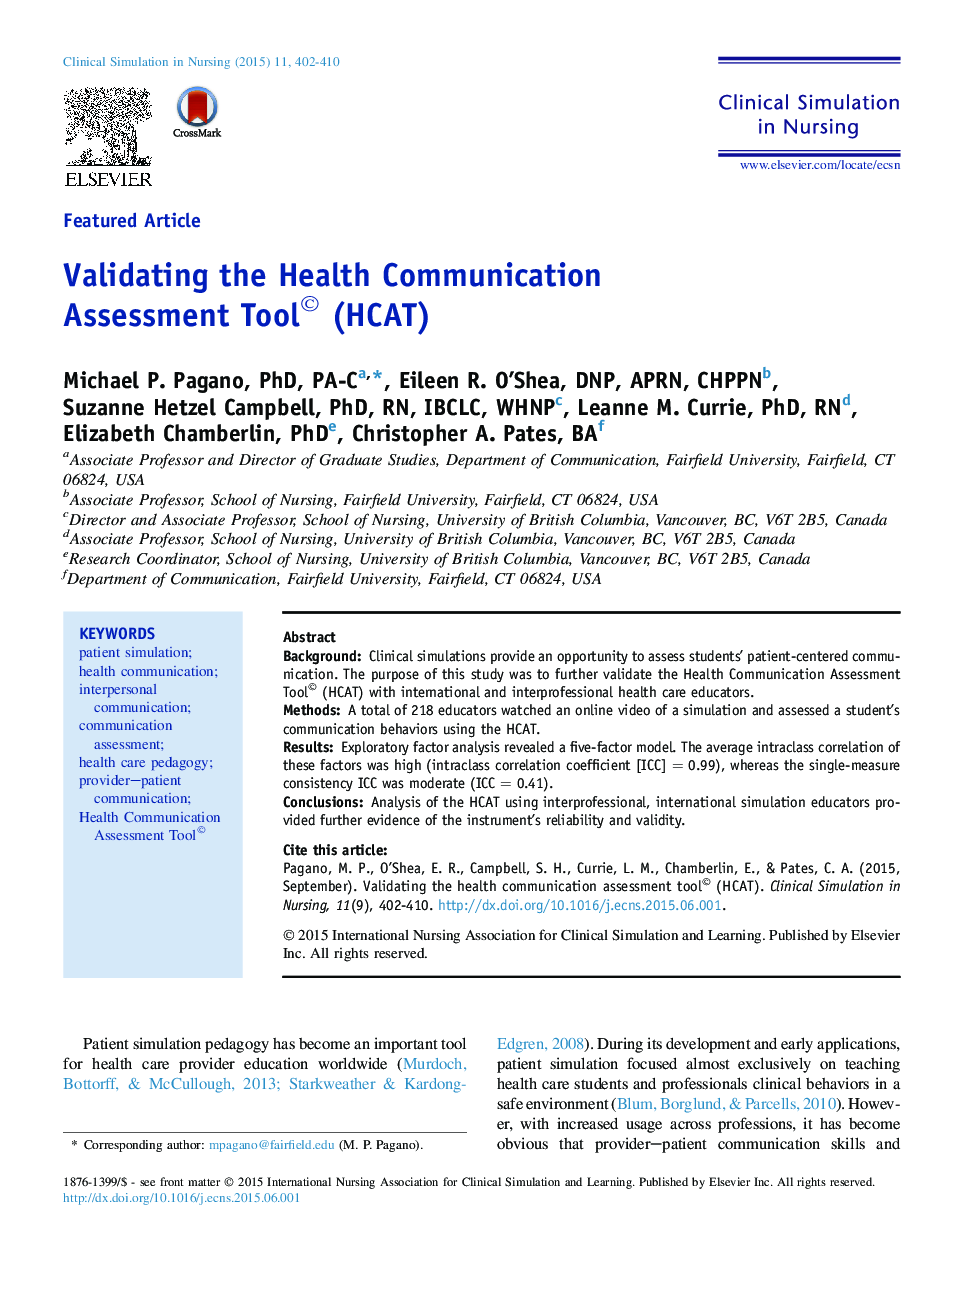 Validating the Health Communication Assessment Tool© (HCAT)